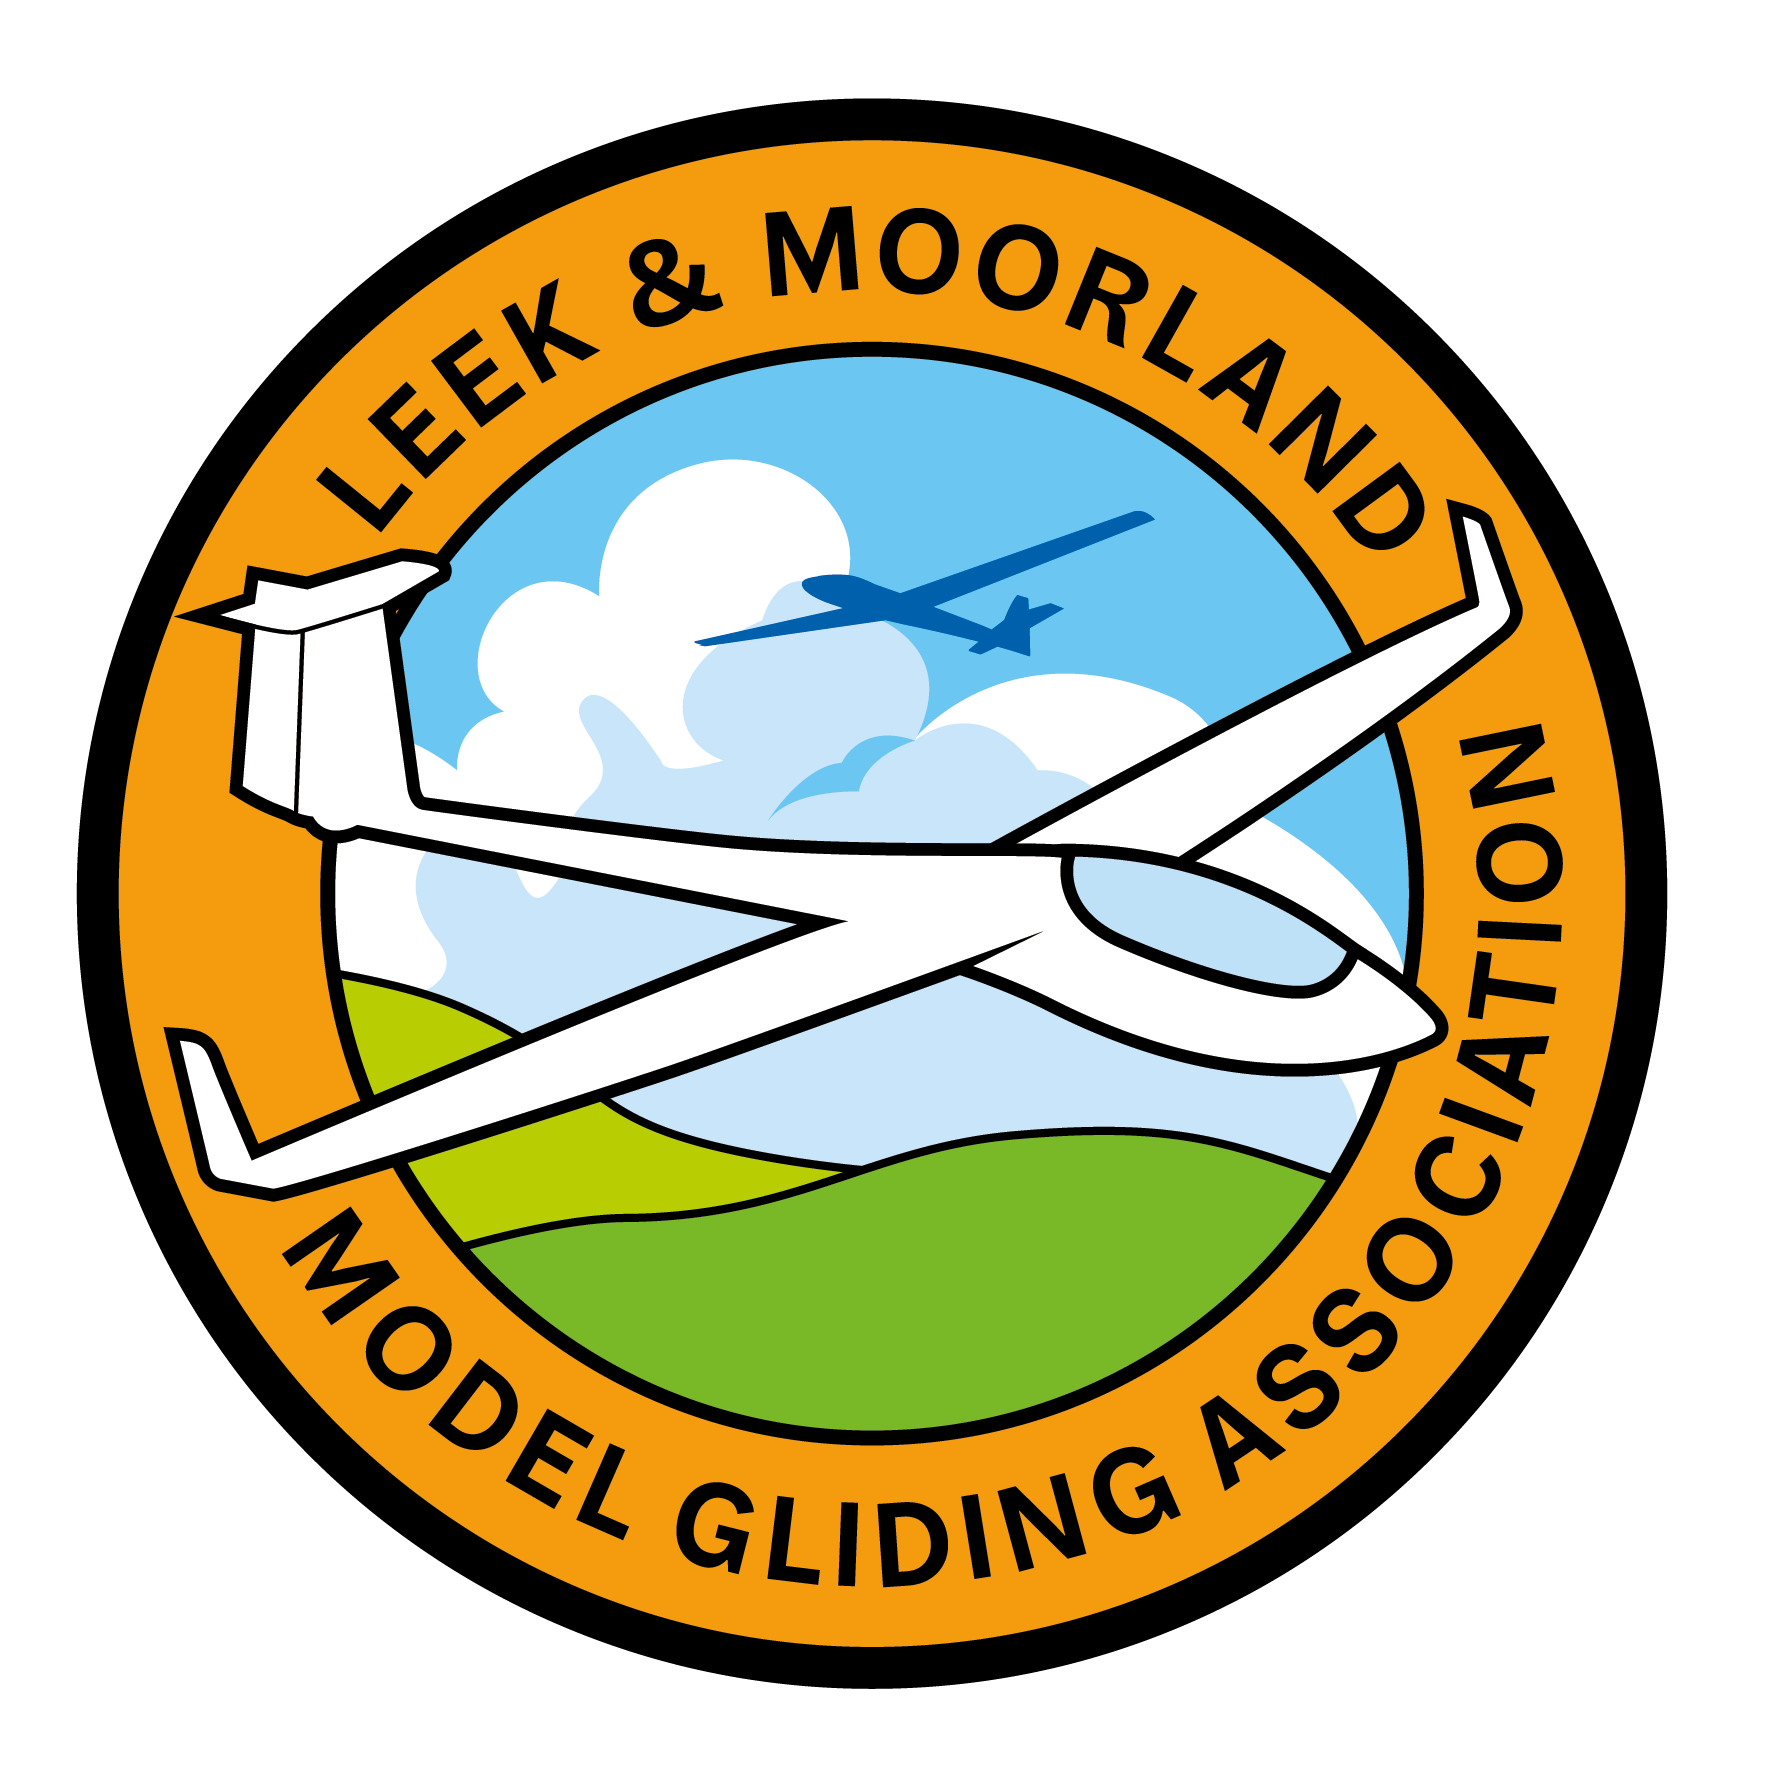 Leek and Moorland Model Gliding Association